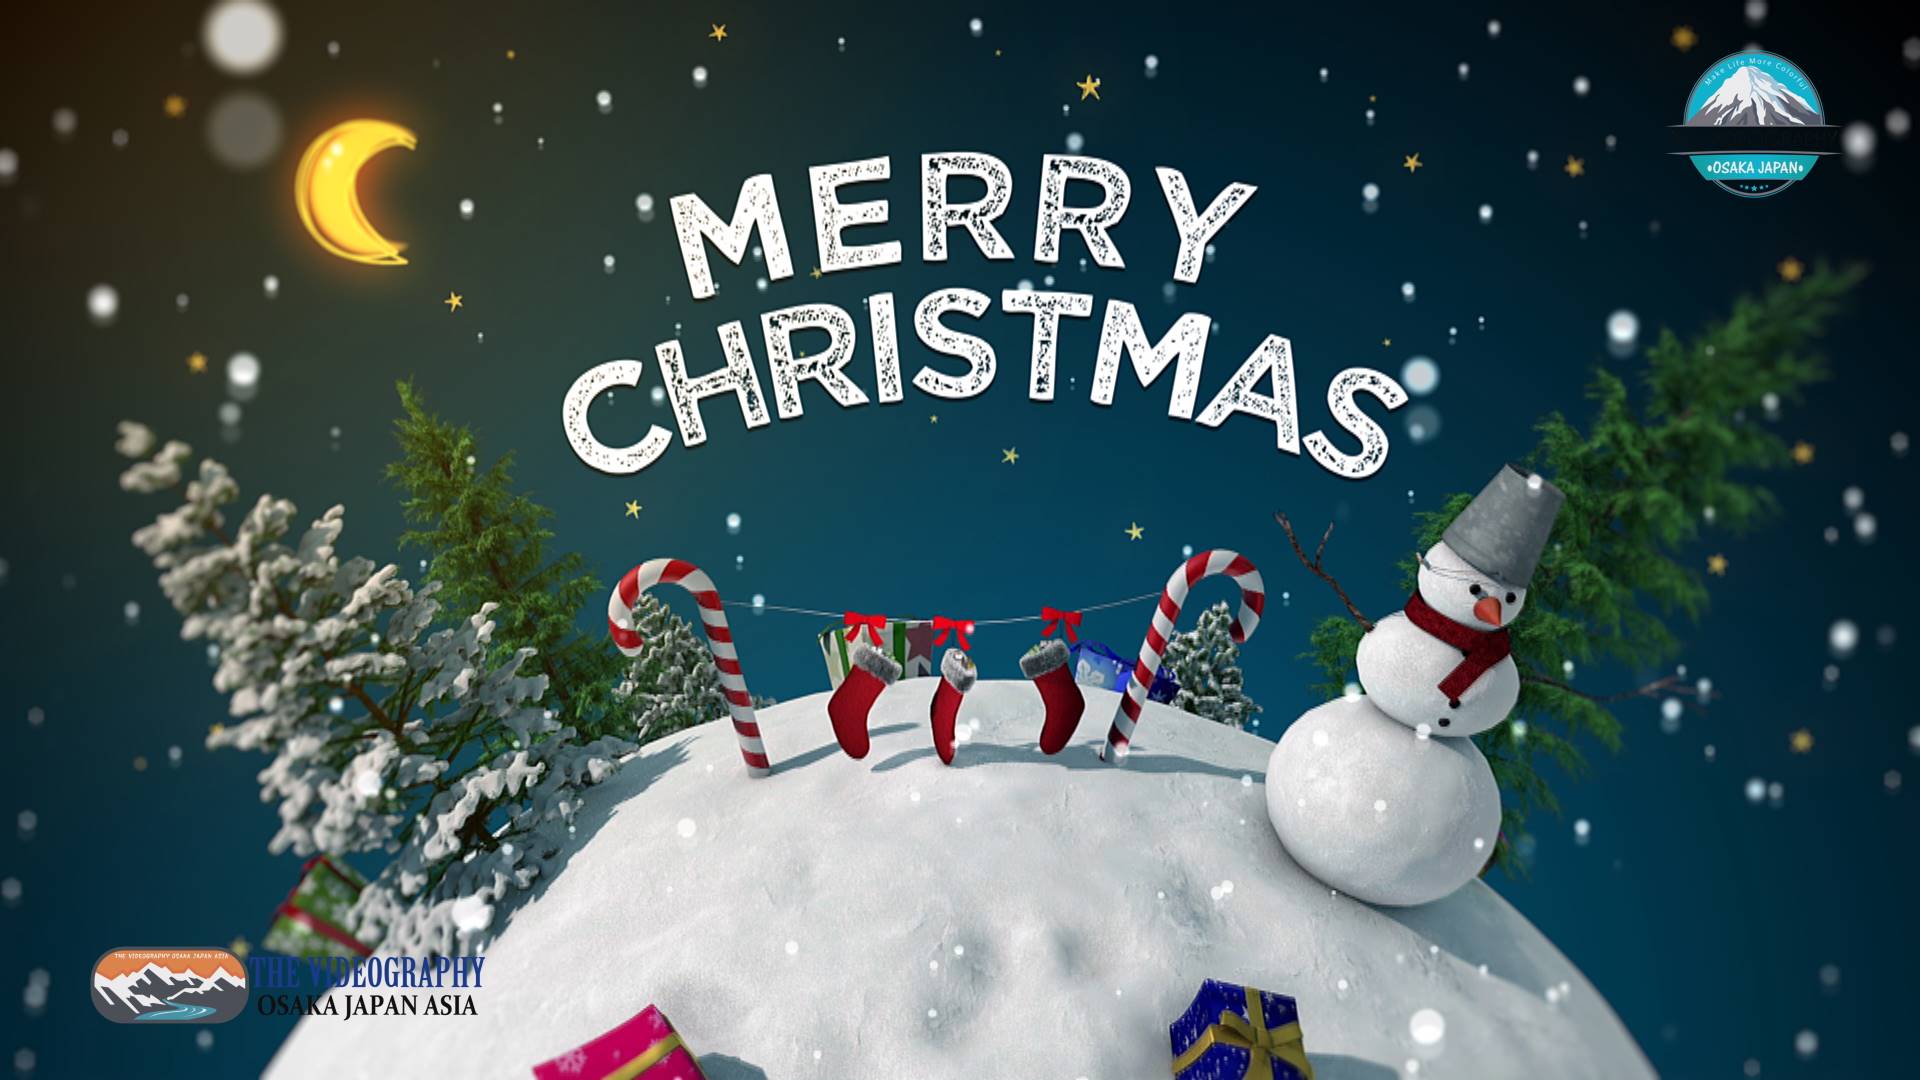 Merry Christmas Promotion Video / メリークリスマス プロモーションビデオ